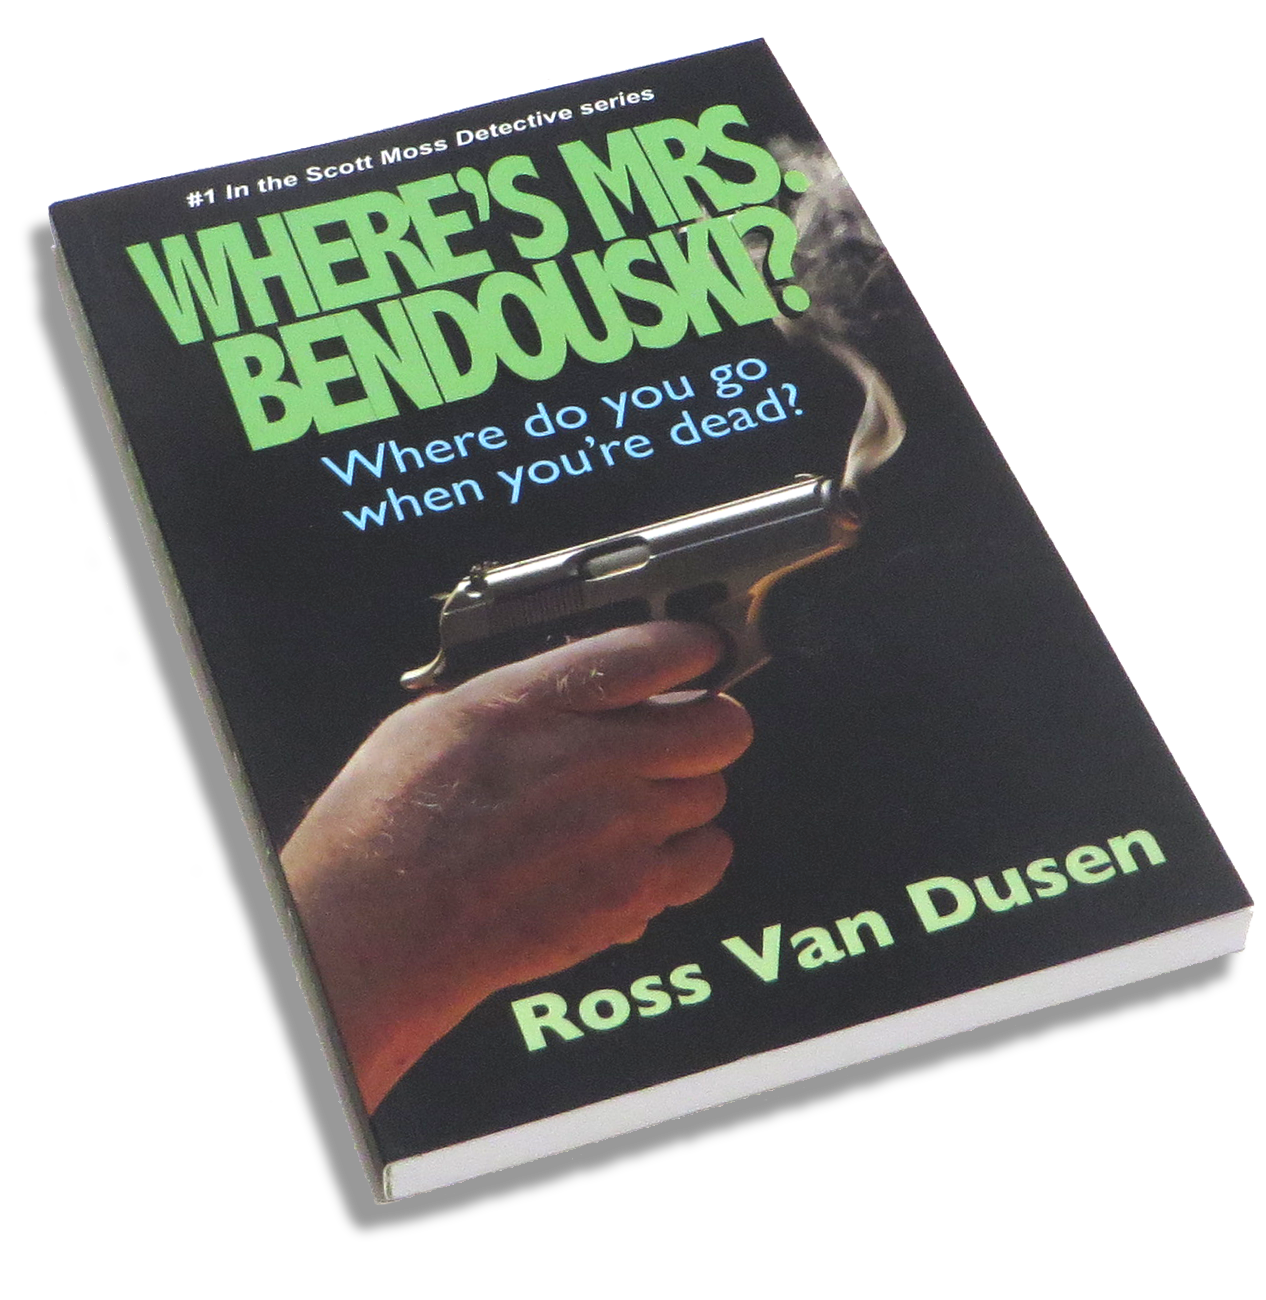 Where’s Mrs. Bendouski? book